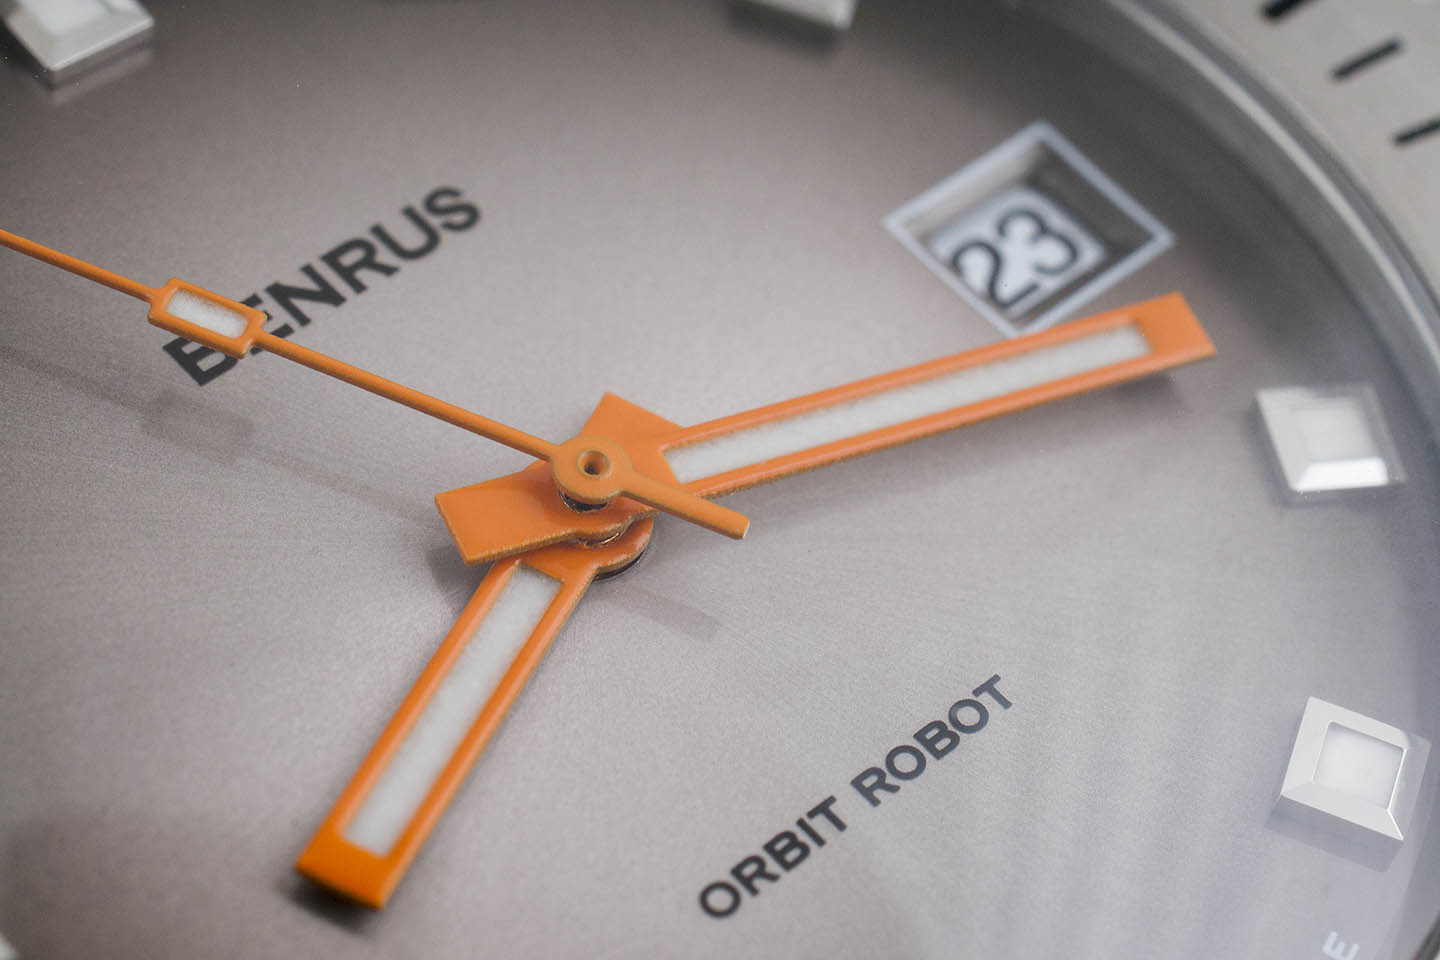 Benrus Orbit Robot Watch Review